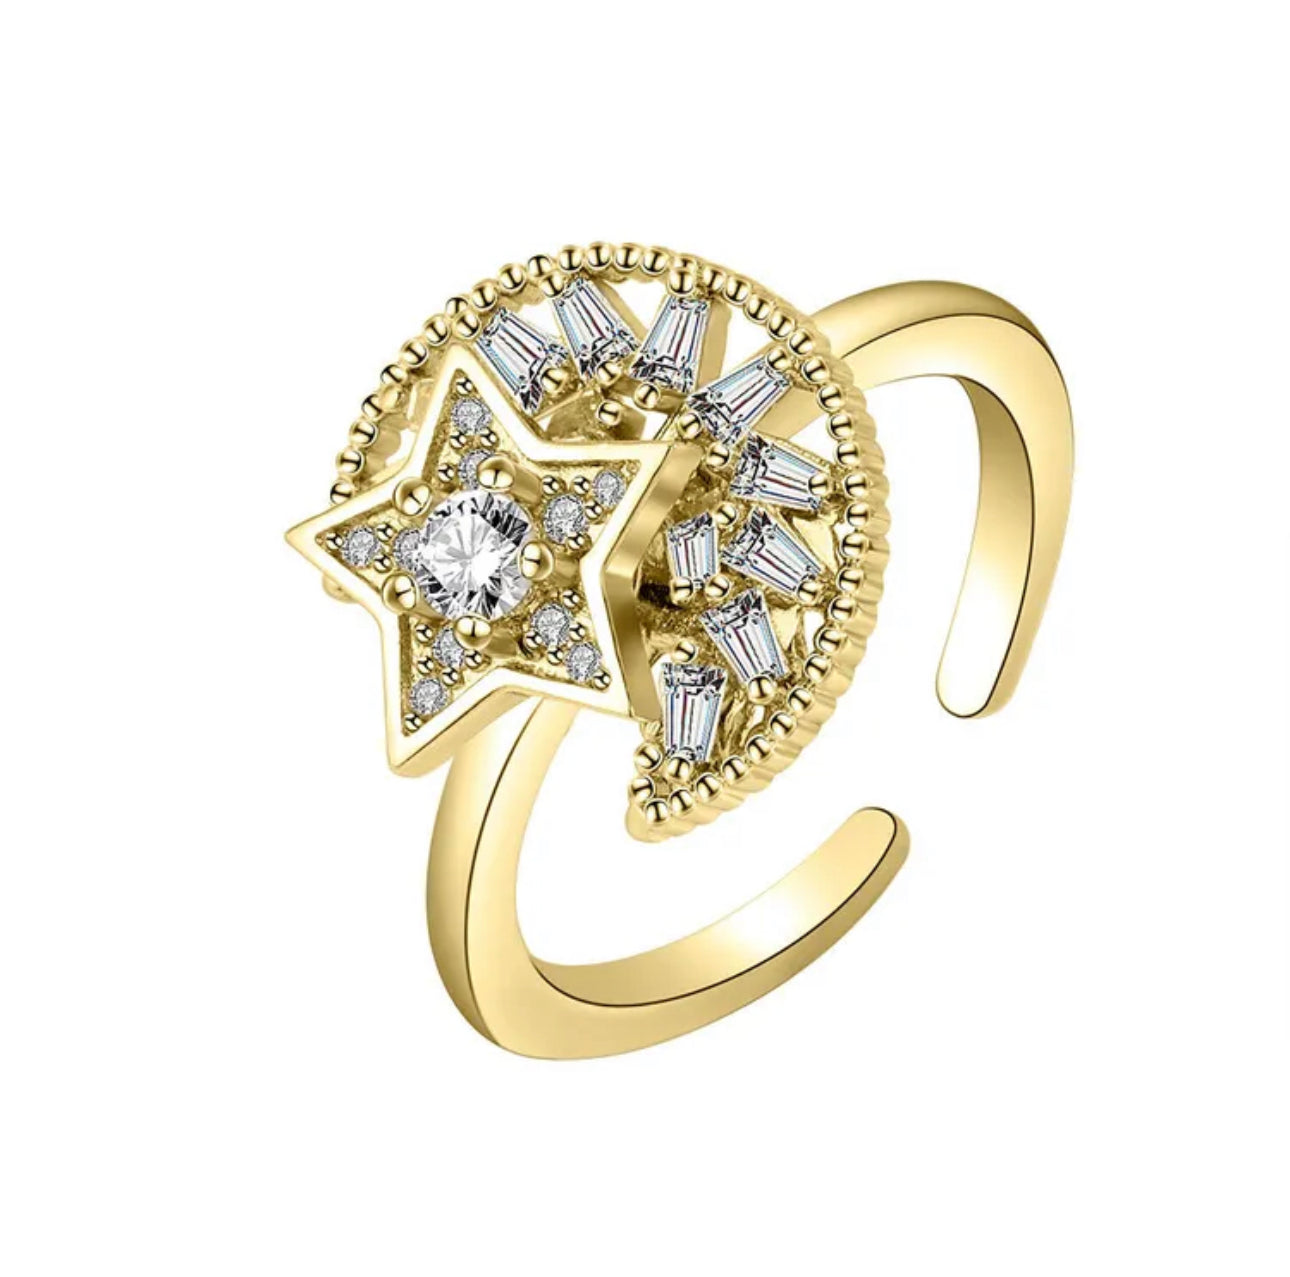 Sparkly Golden Moon Star & Fidget Ring